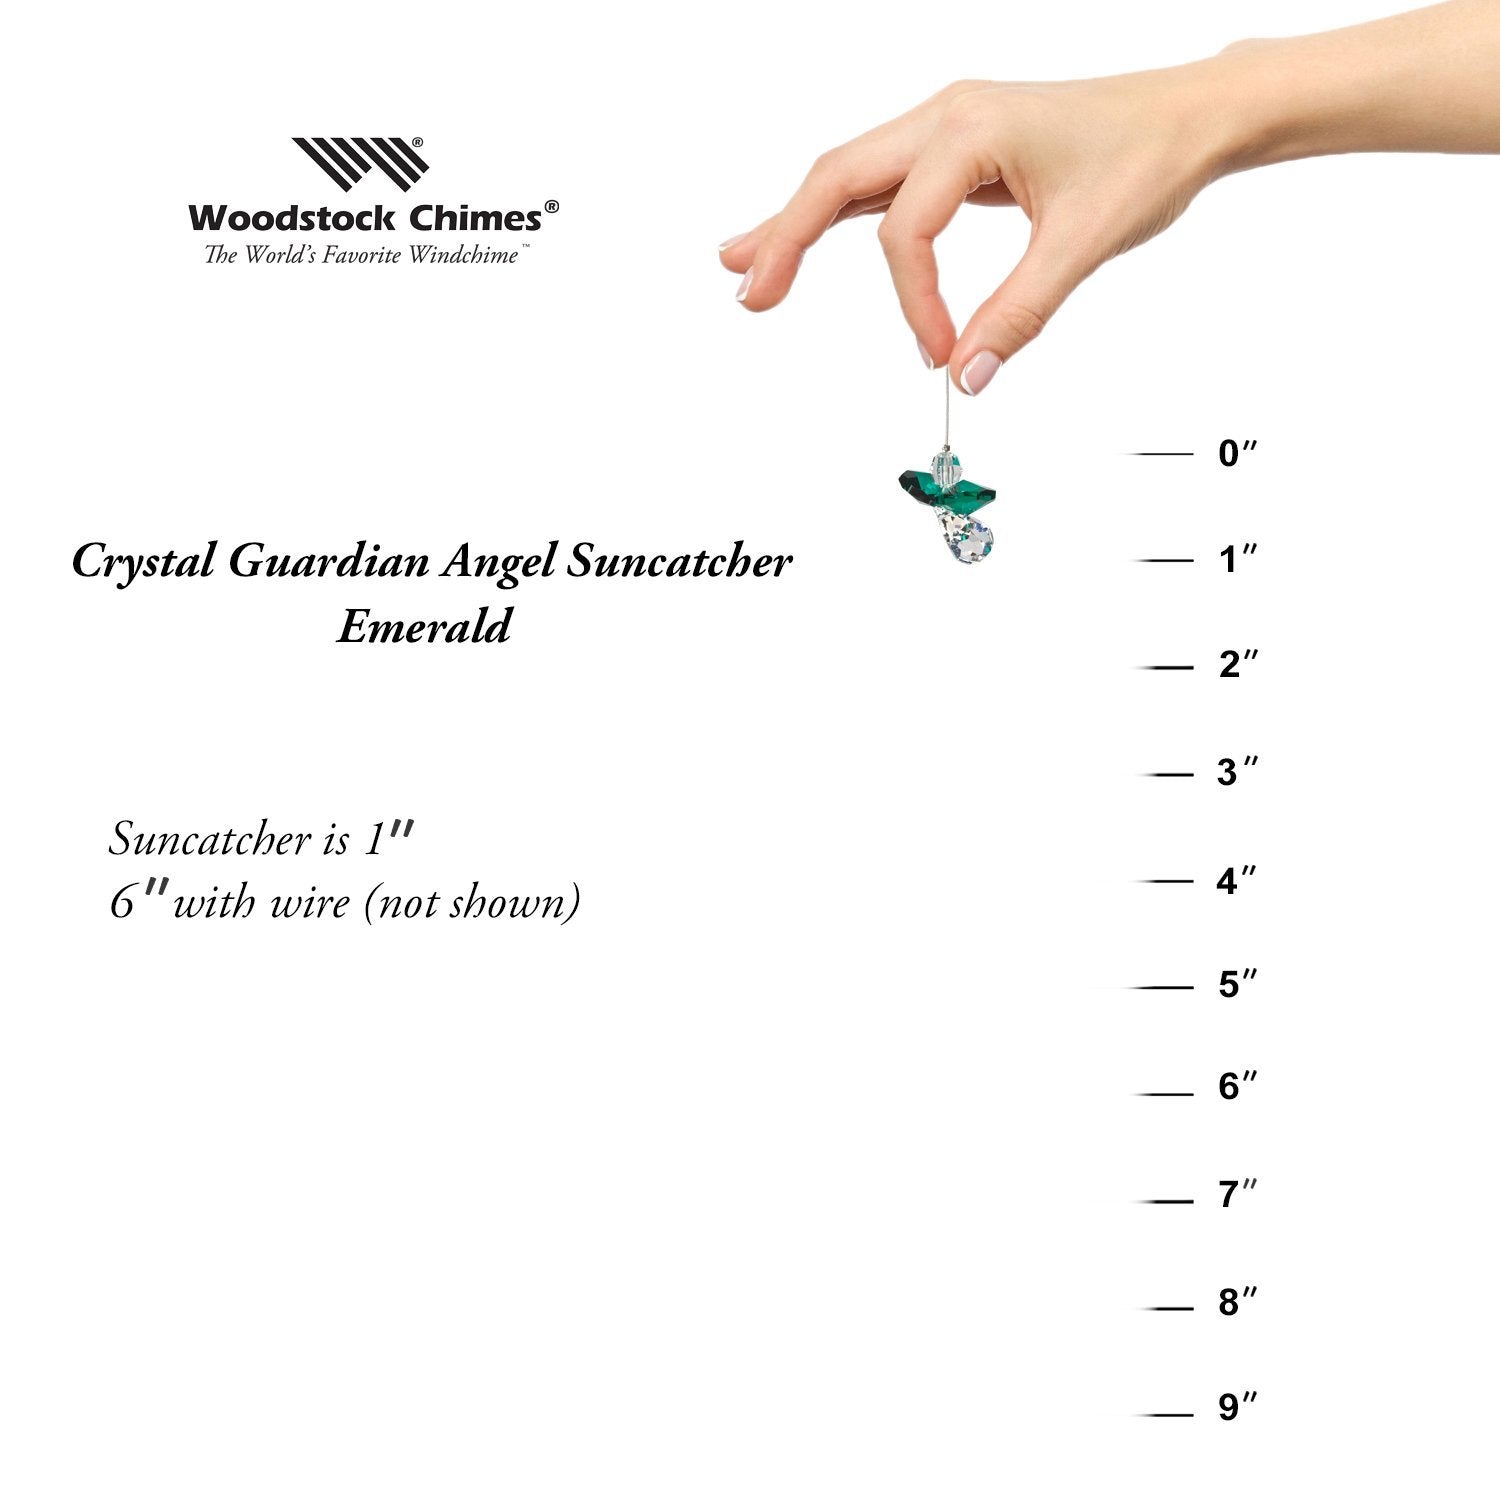 Crystal Guardian Angel Suncatcher - Emerald (May) proportion image